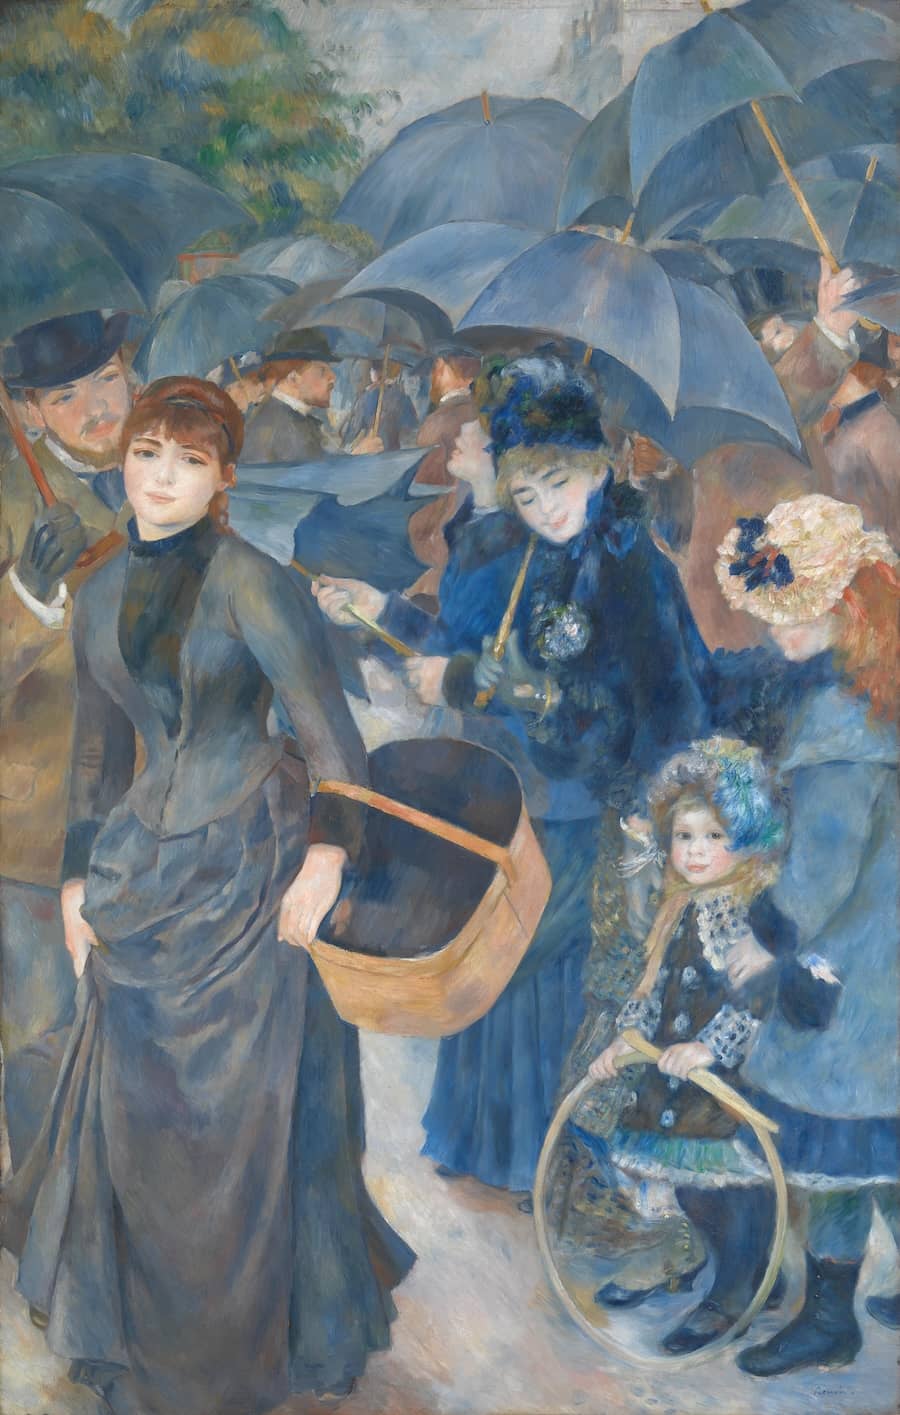 The Umbrellas - by Pierre-Auguste Renoir